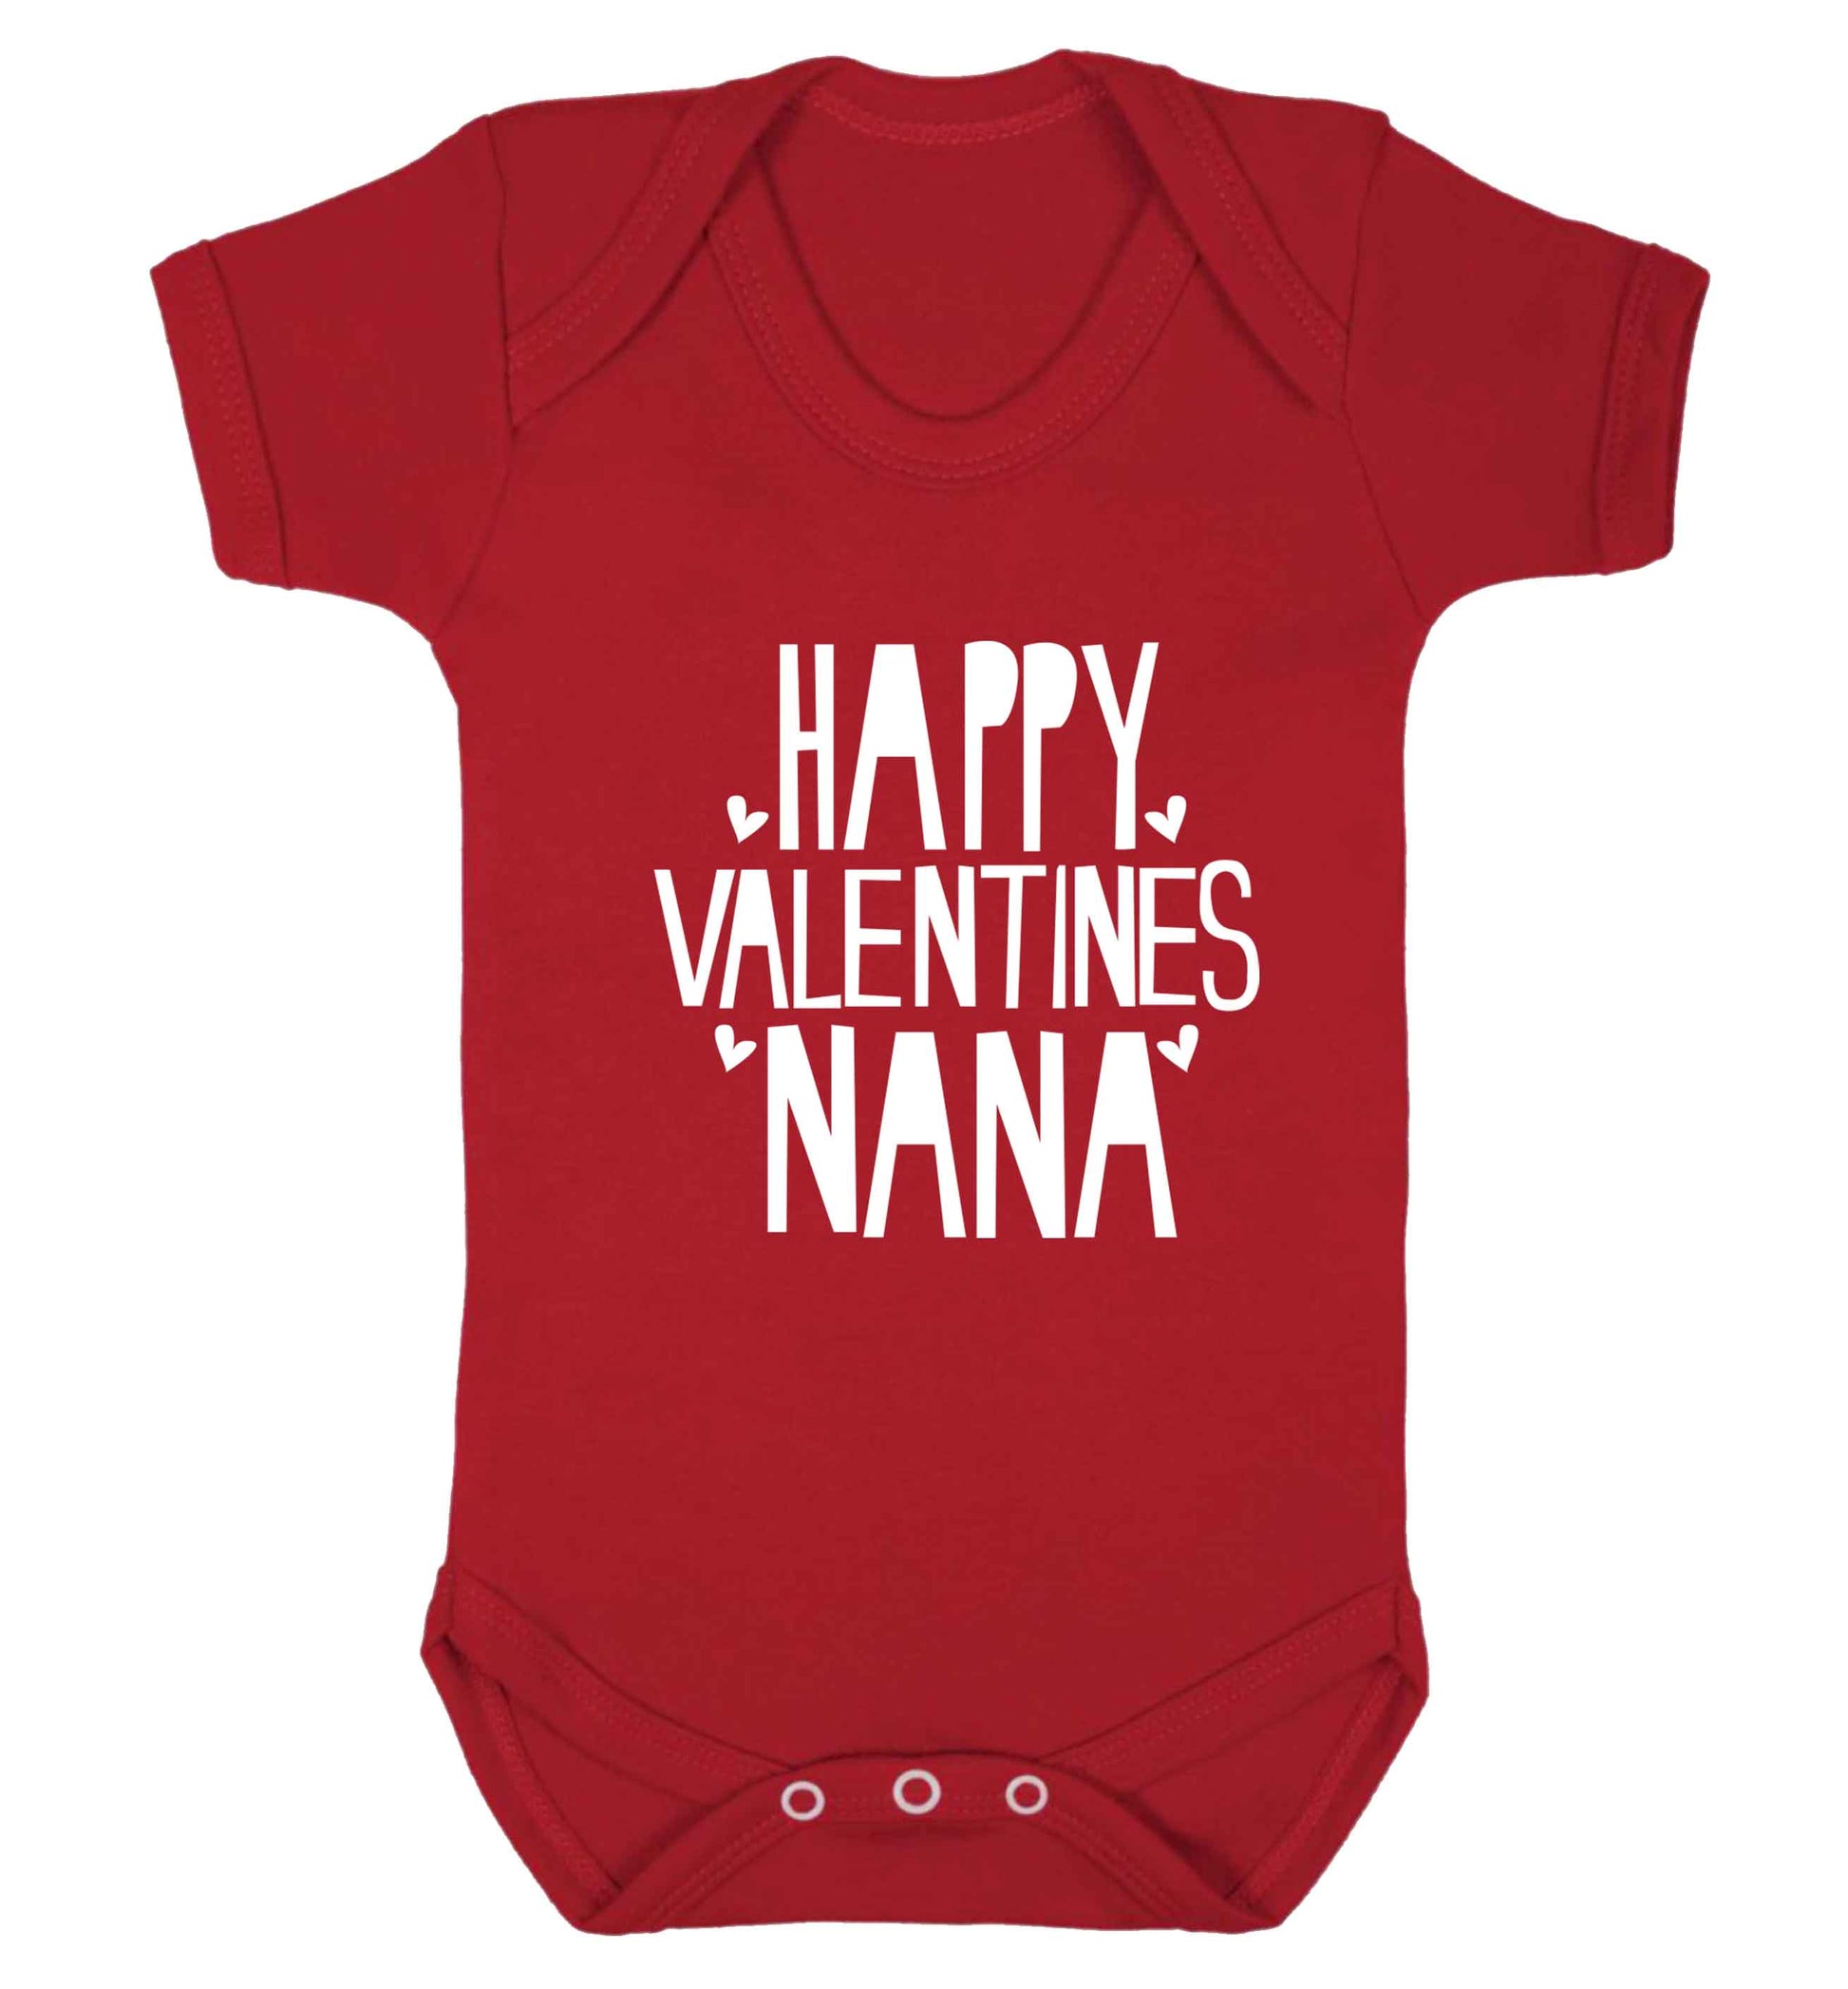 Happy valentines nana baby vest red 18-24 months